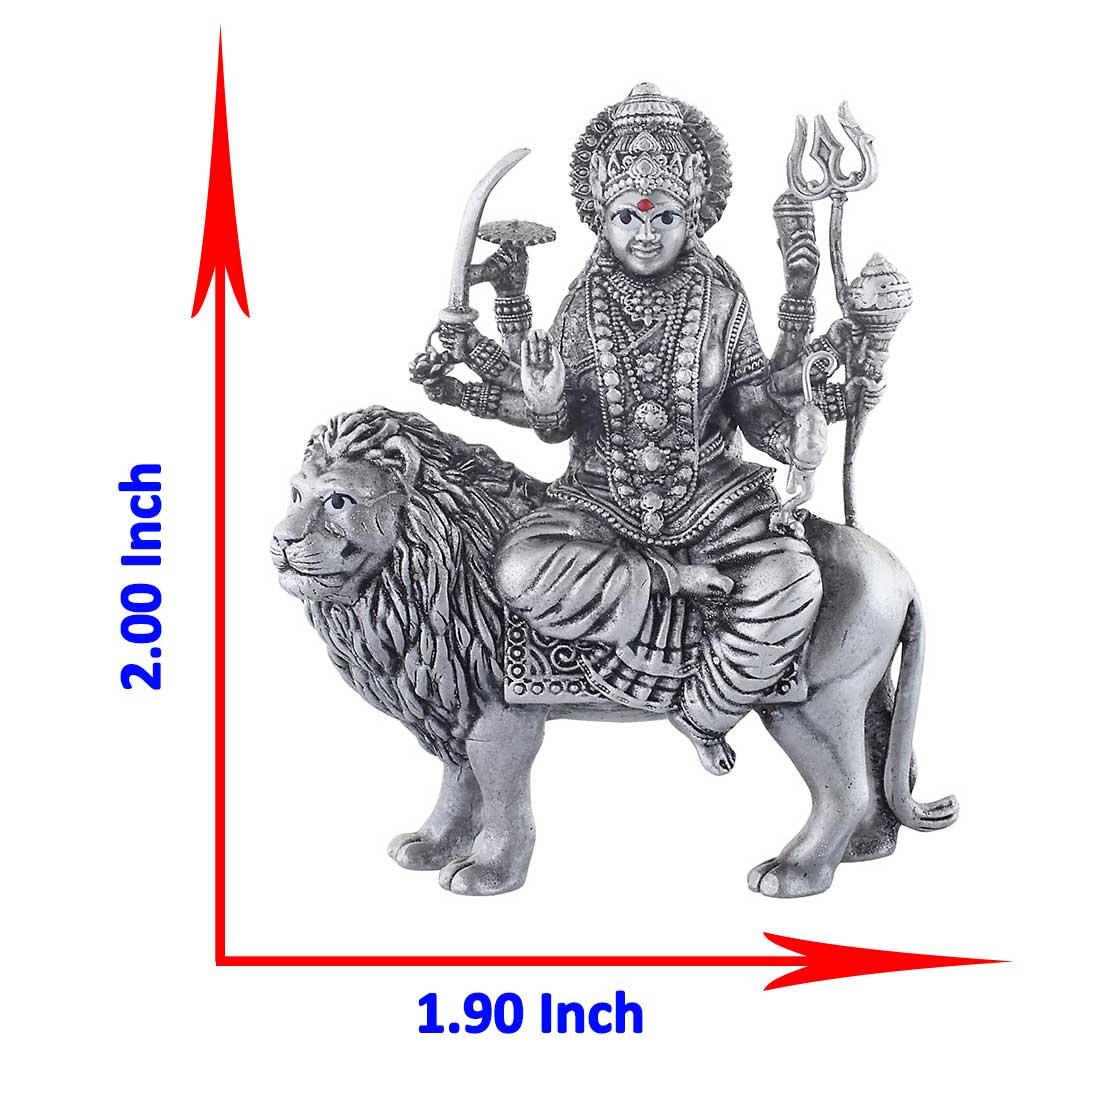 size of durga idol